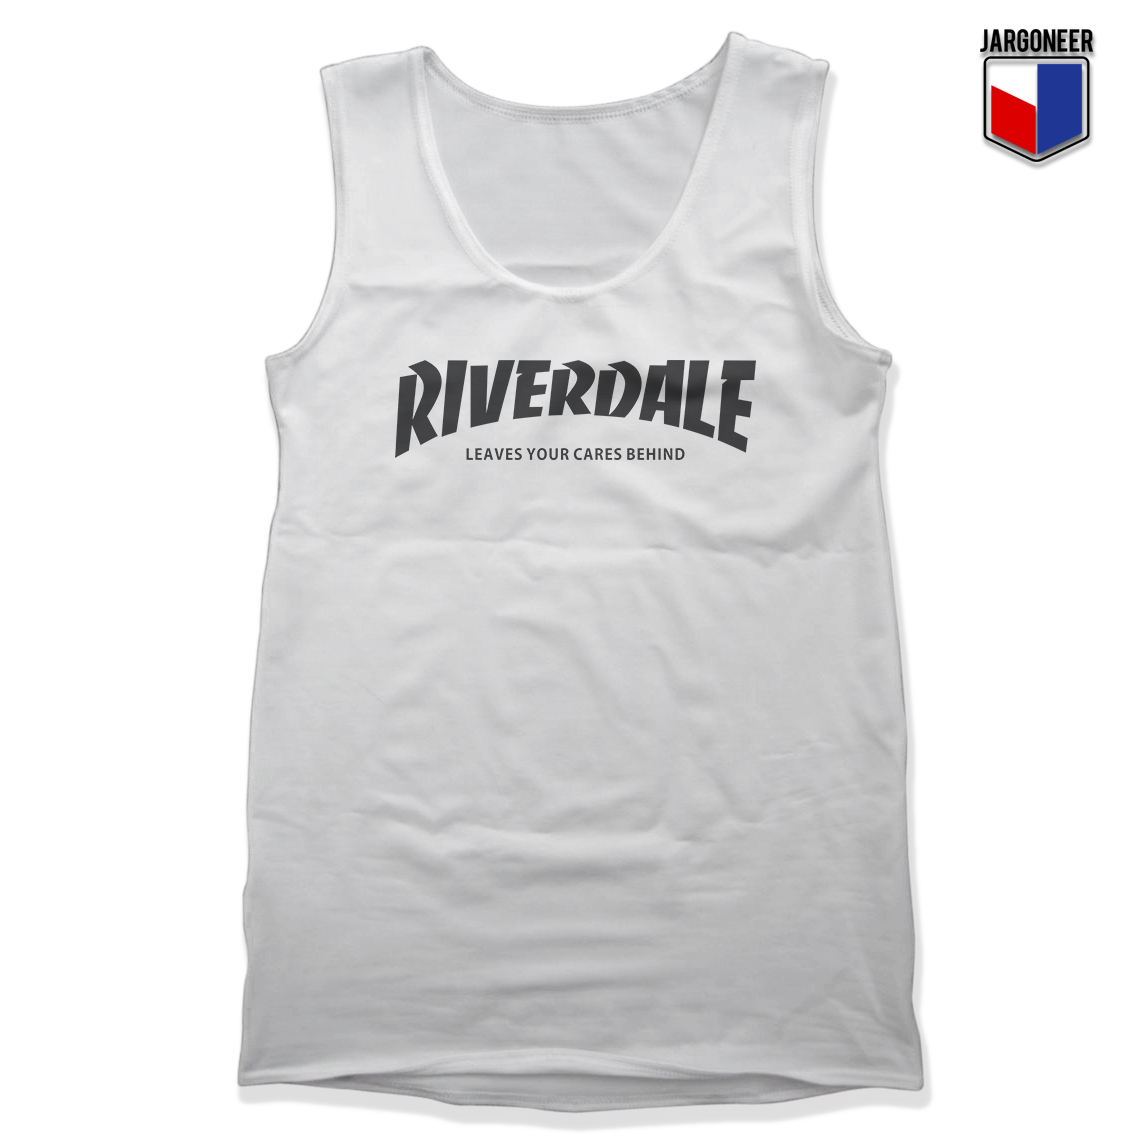 Riverdale Leaves Your Cares Behind White Tank - Shop Unique Graphic Cool Shirt Designs